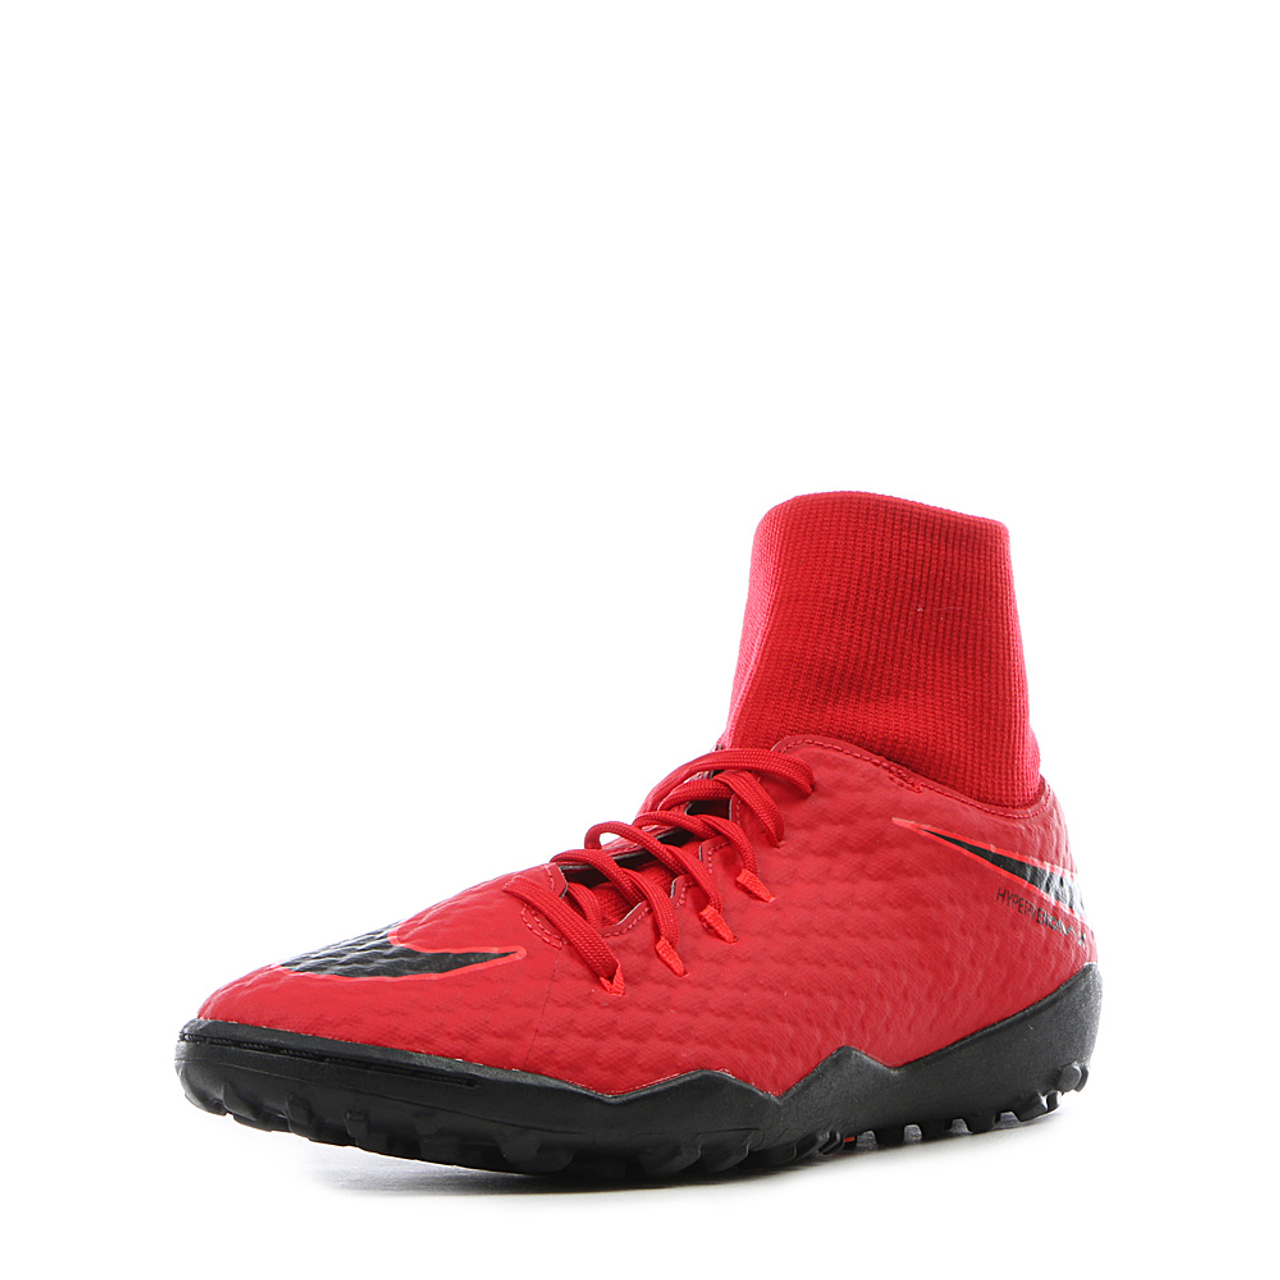 Nike Hypervenom Phelon 3 DF TF - University Red/ Black SD (1121) - ohp soccer